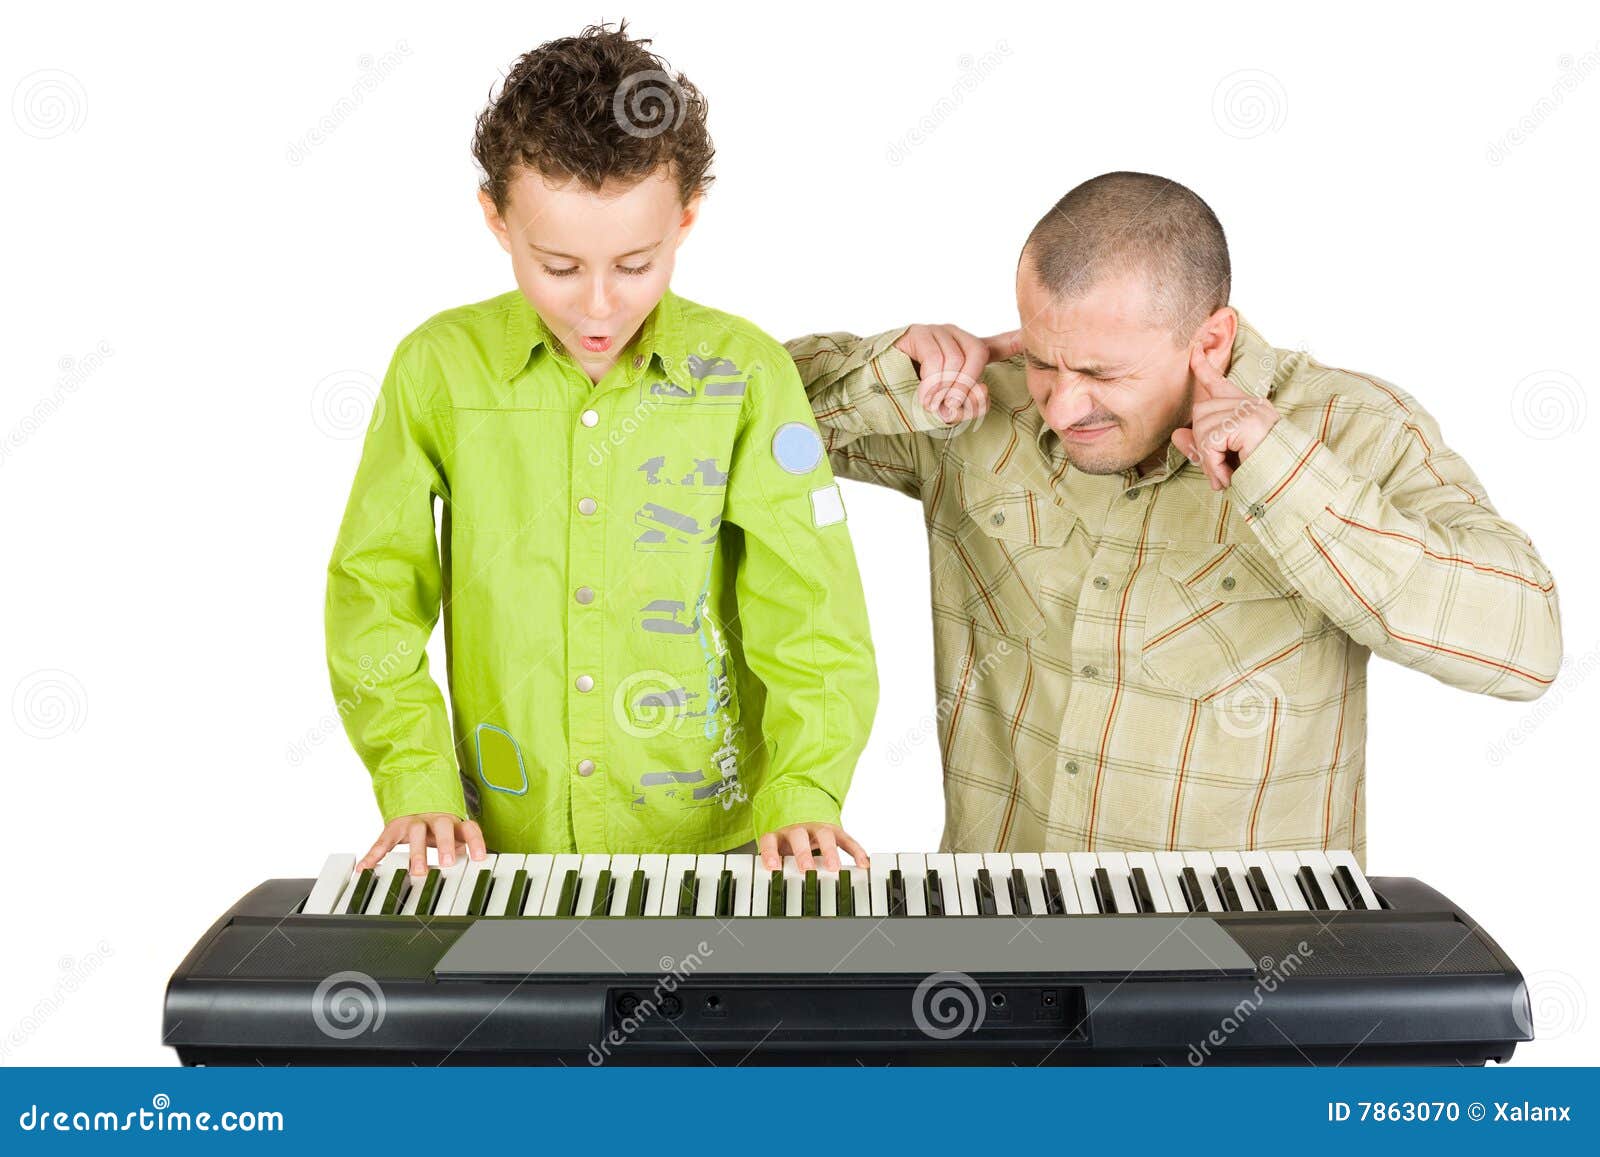 Does he play the piano. Плохая игра на пианино. Картинка ребенок за пианино. Фото игры дети на синтезаторах. Play Piano Play the Piano.